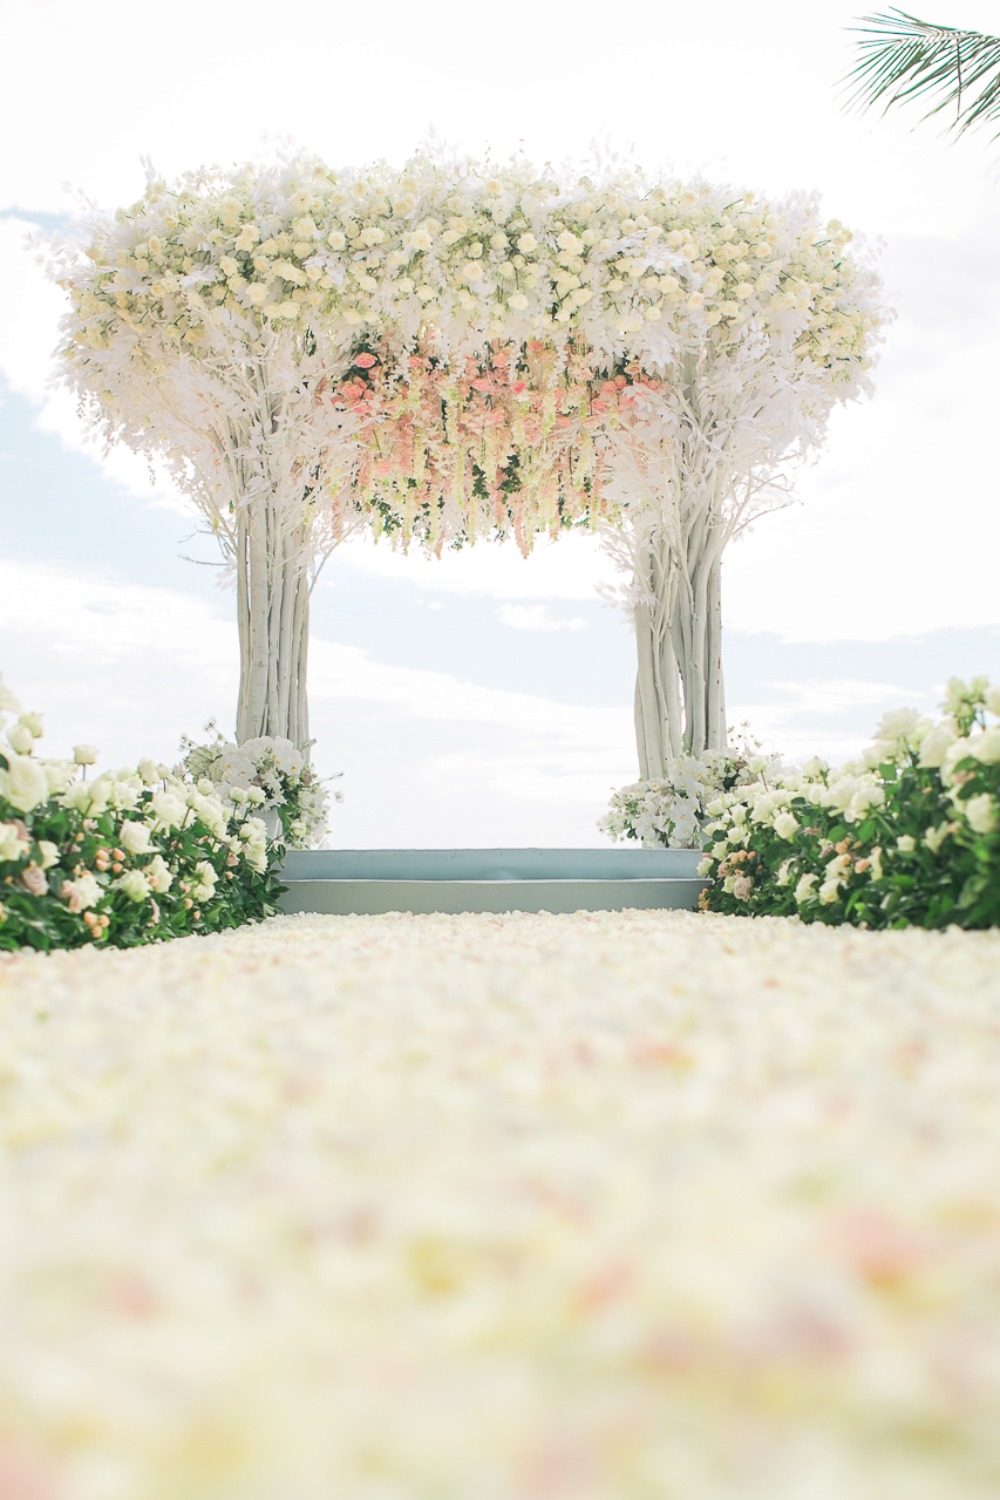 Stunning wedding arbor